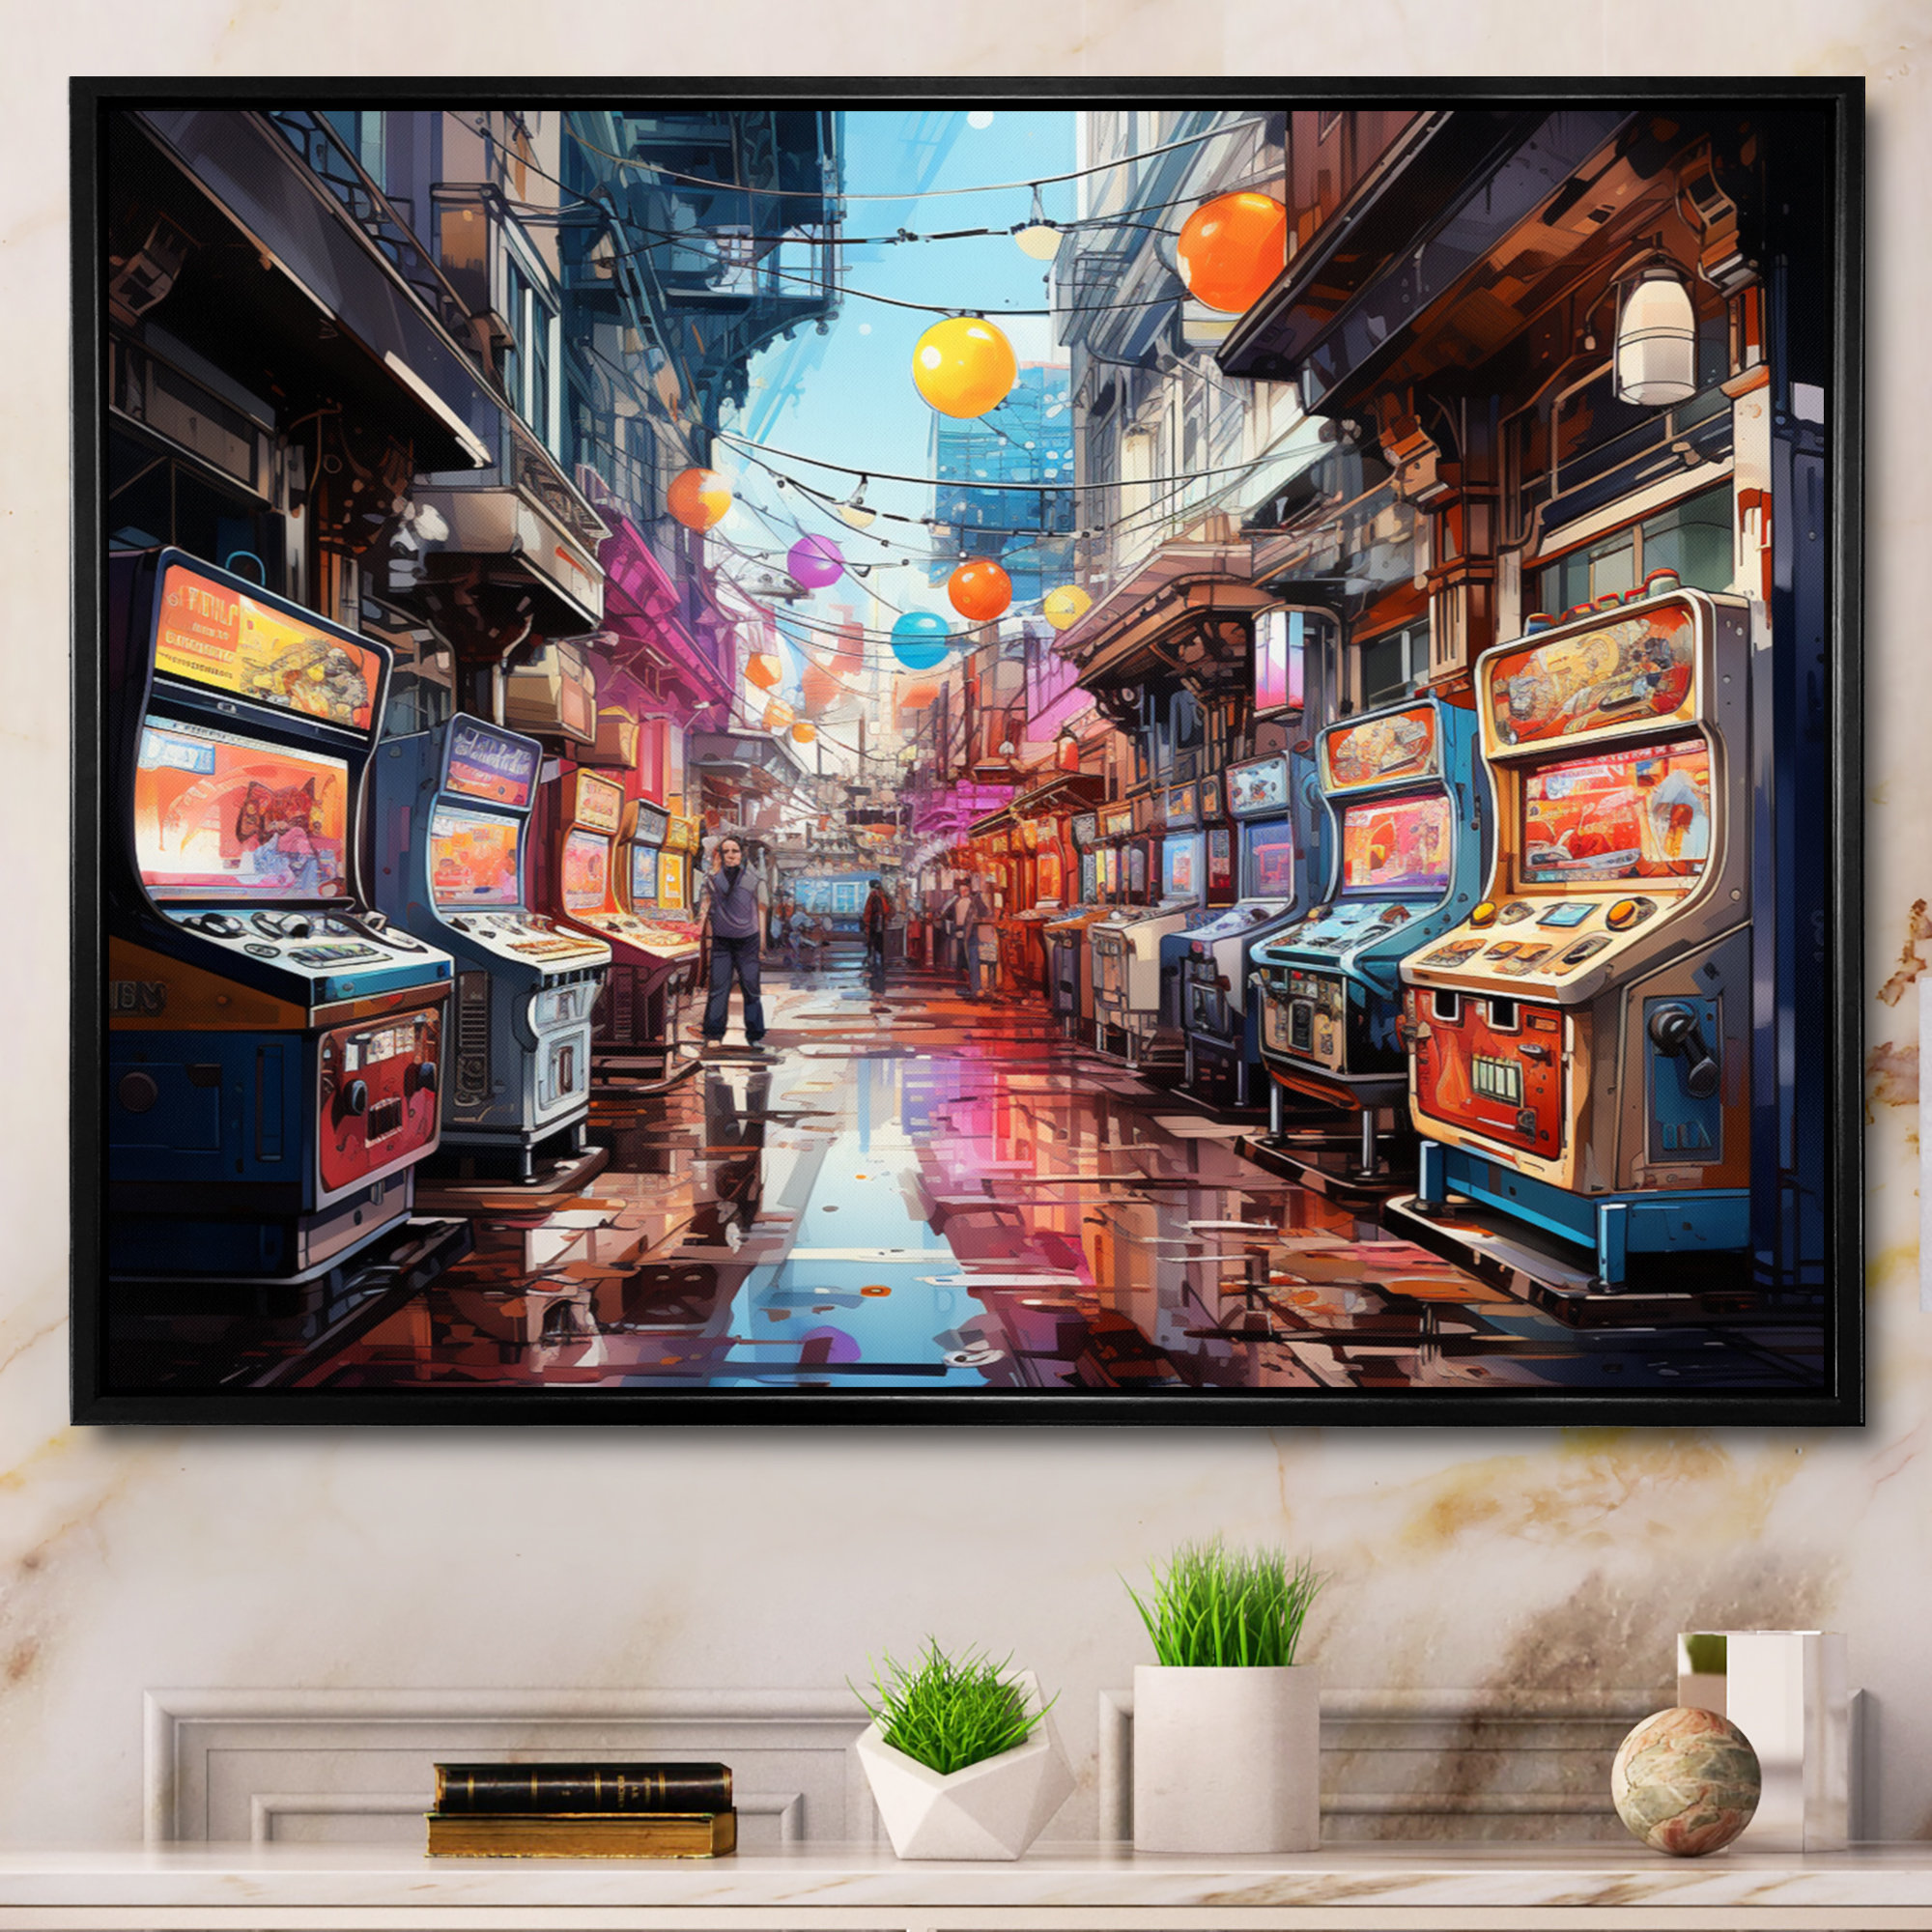 Colorful Winston Framed Video Dreams Wayfair Game Print On Porter Canvas | Arcade